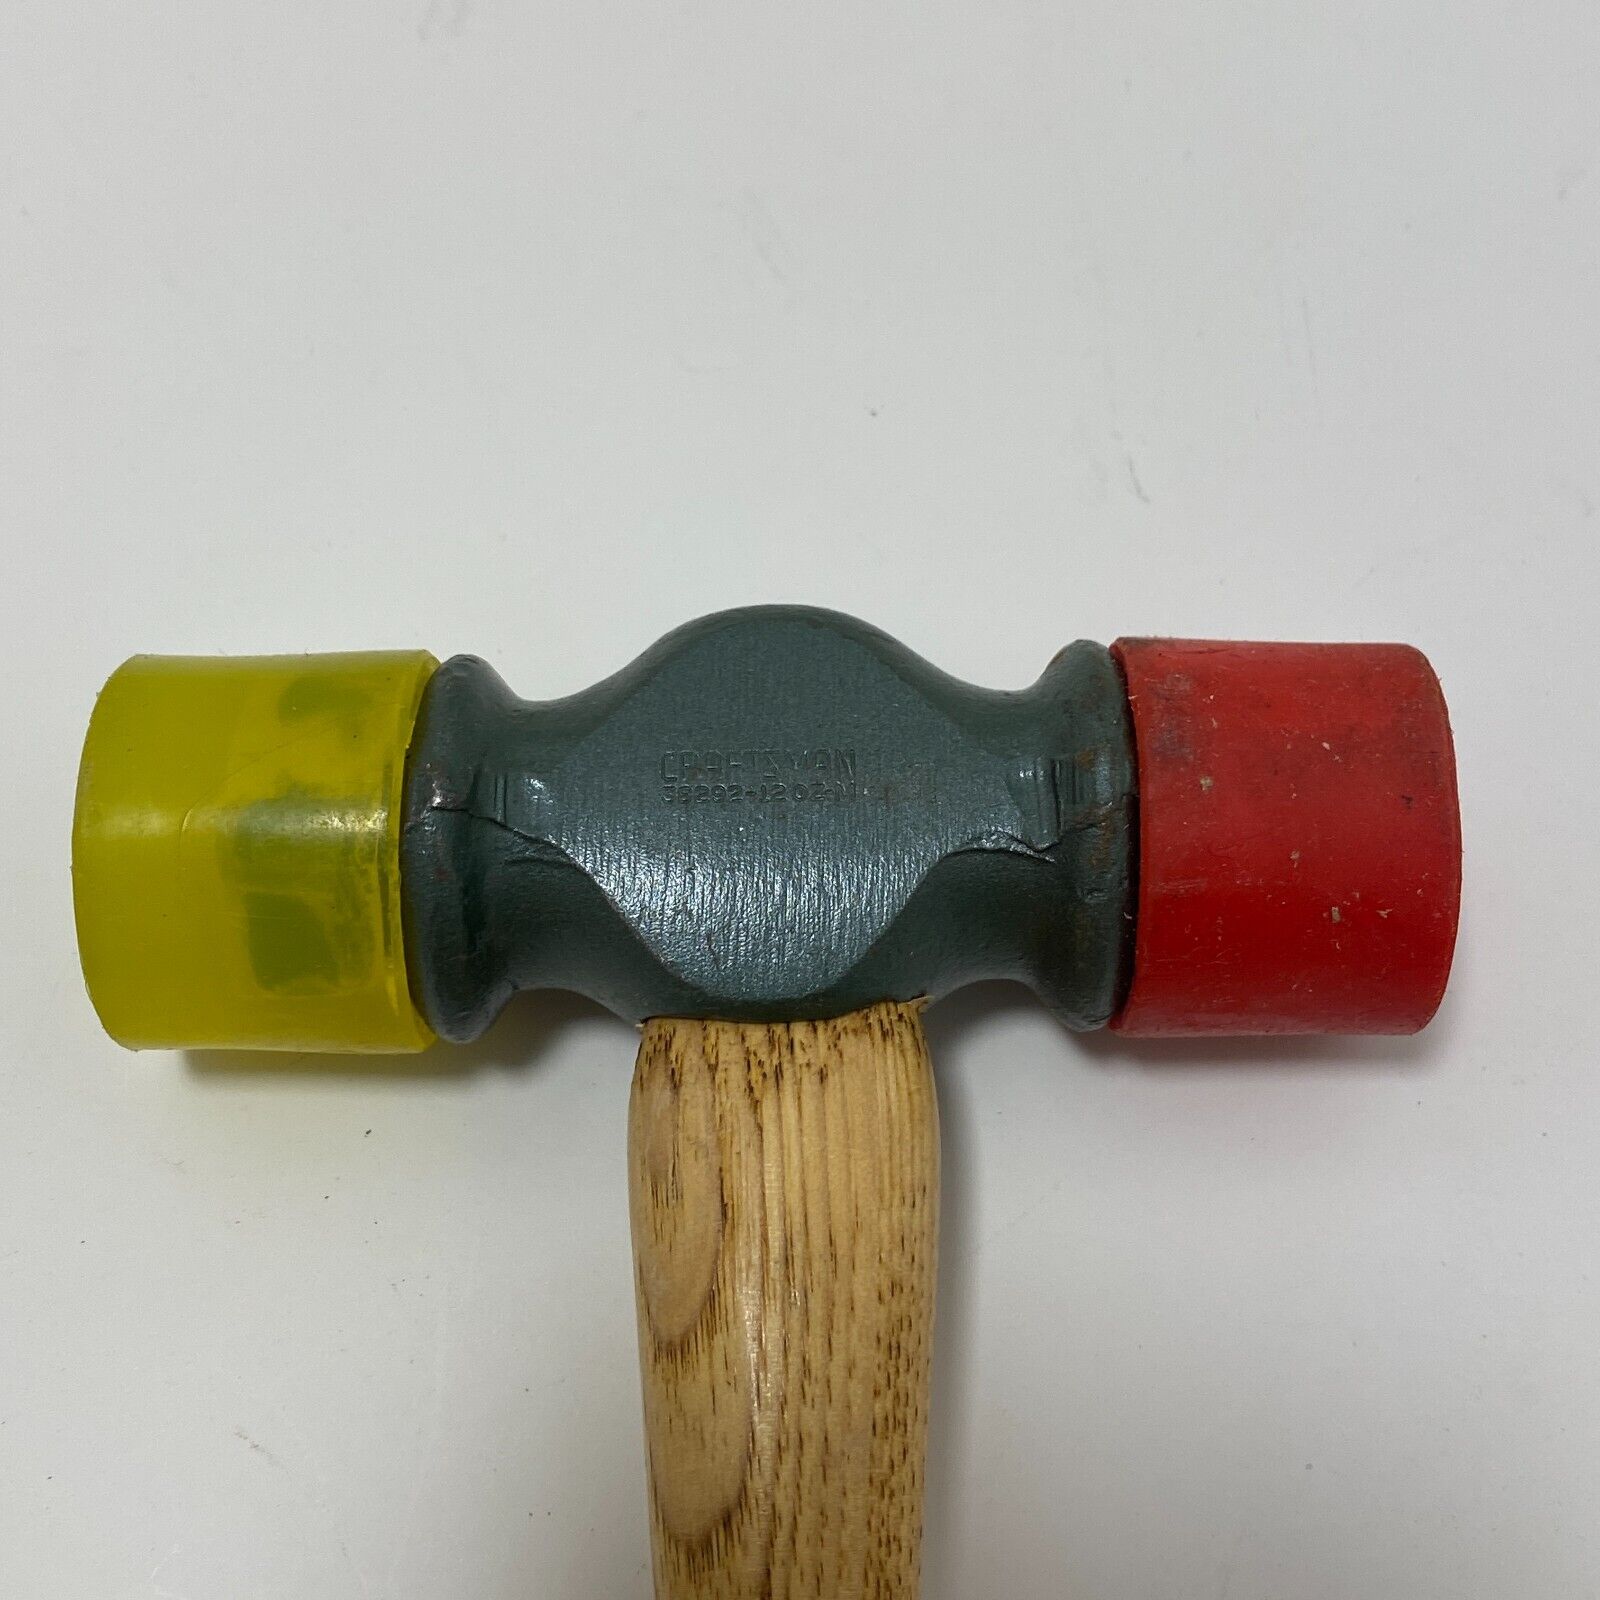 VTG Sears Craftsman Soft Face Hammer No. 38292 12 Oz M Red Soft Yellow Hard Tip